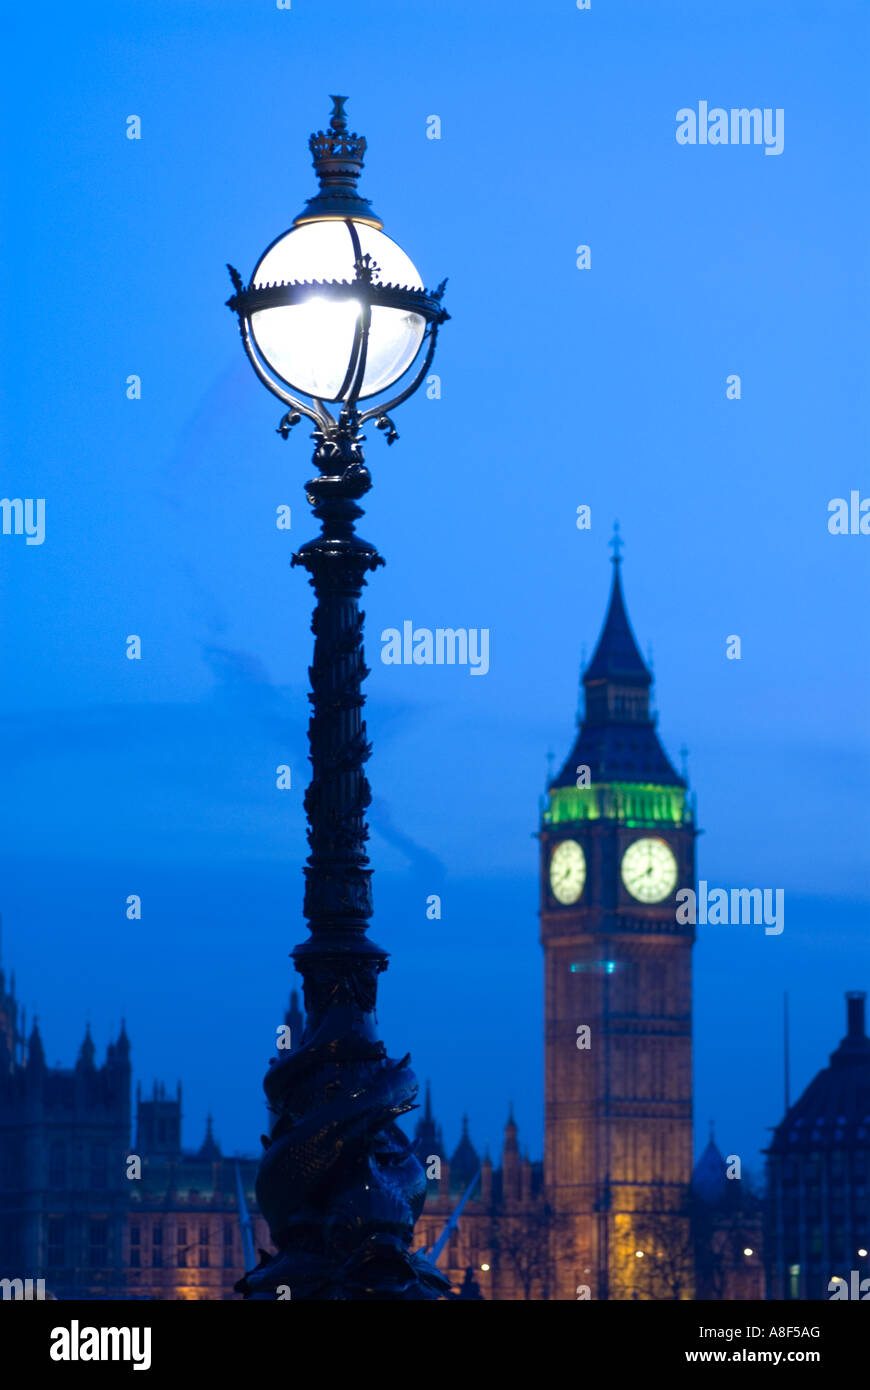 Ornate lamp post and Big Ben at night London England UK Stock Photo